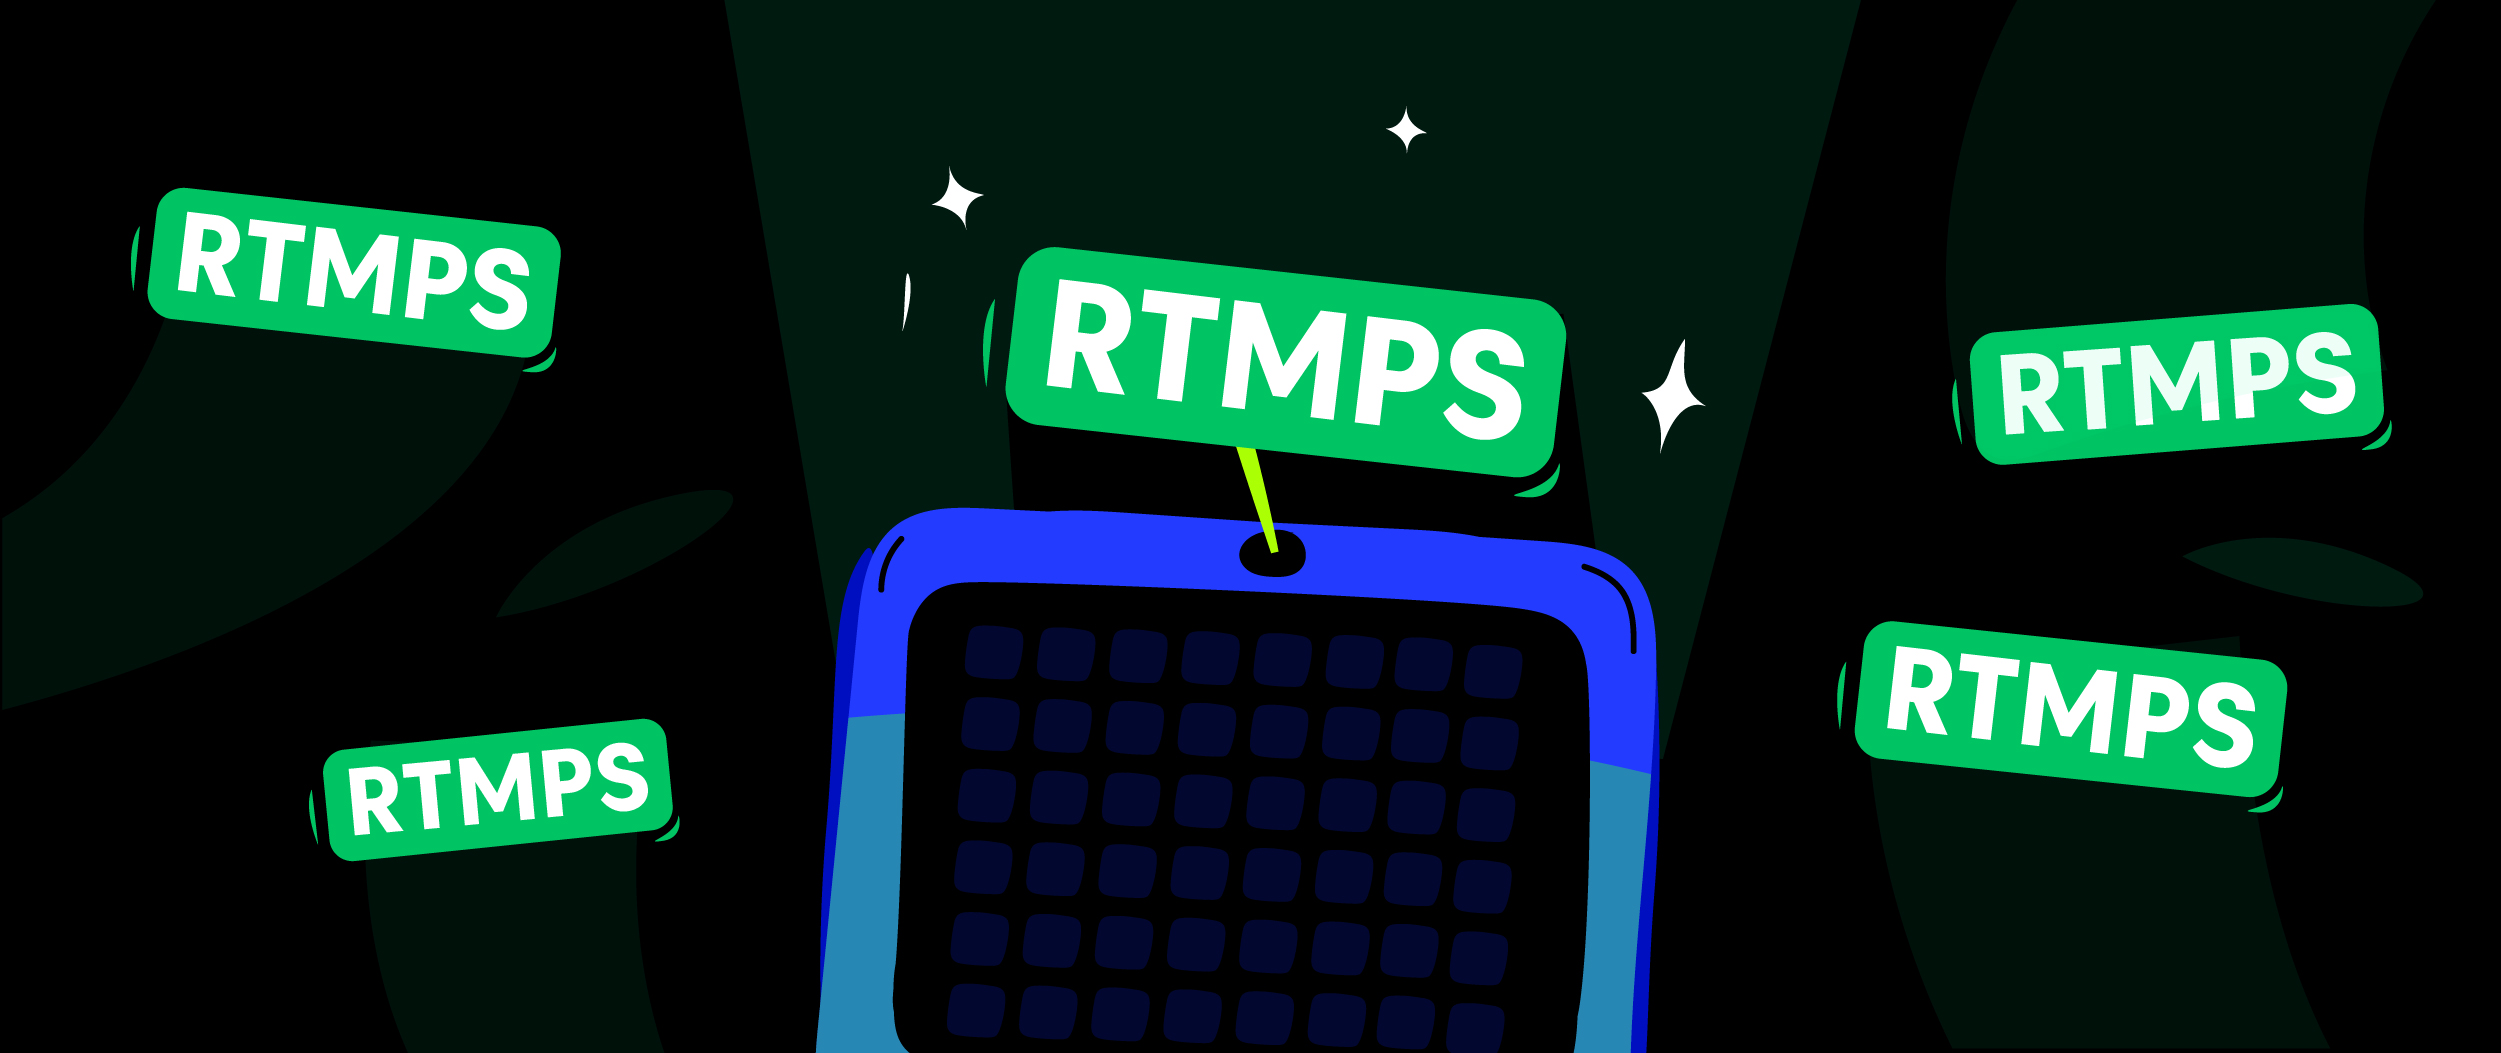 Understanding RTMPS Explained